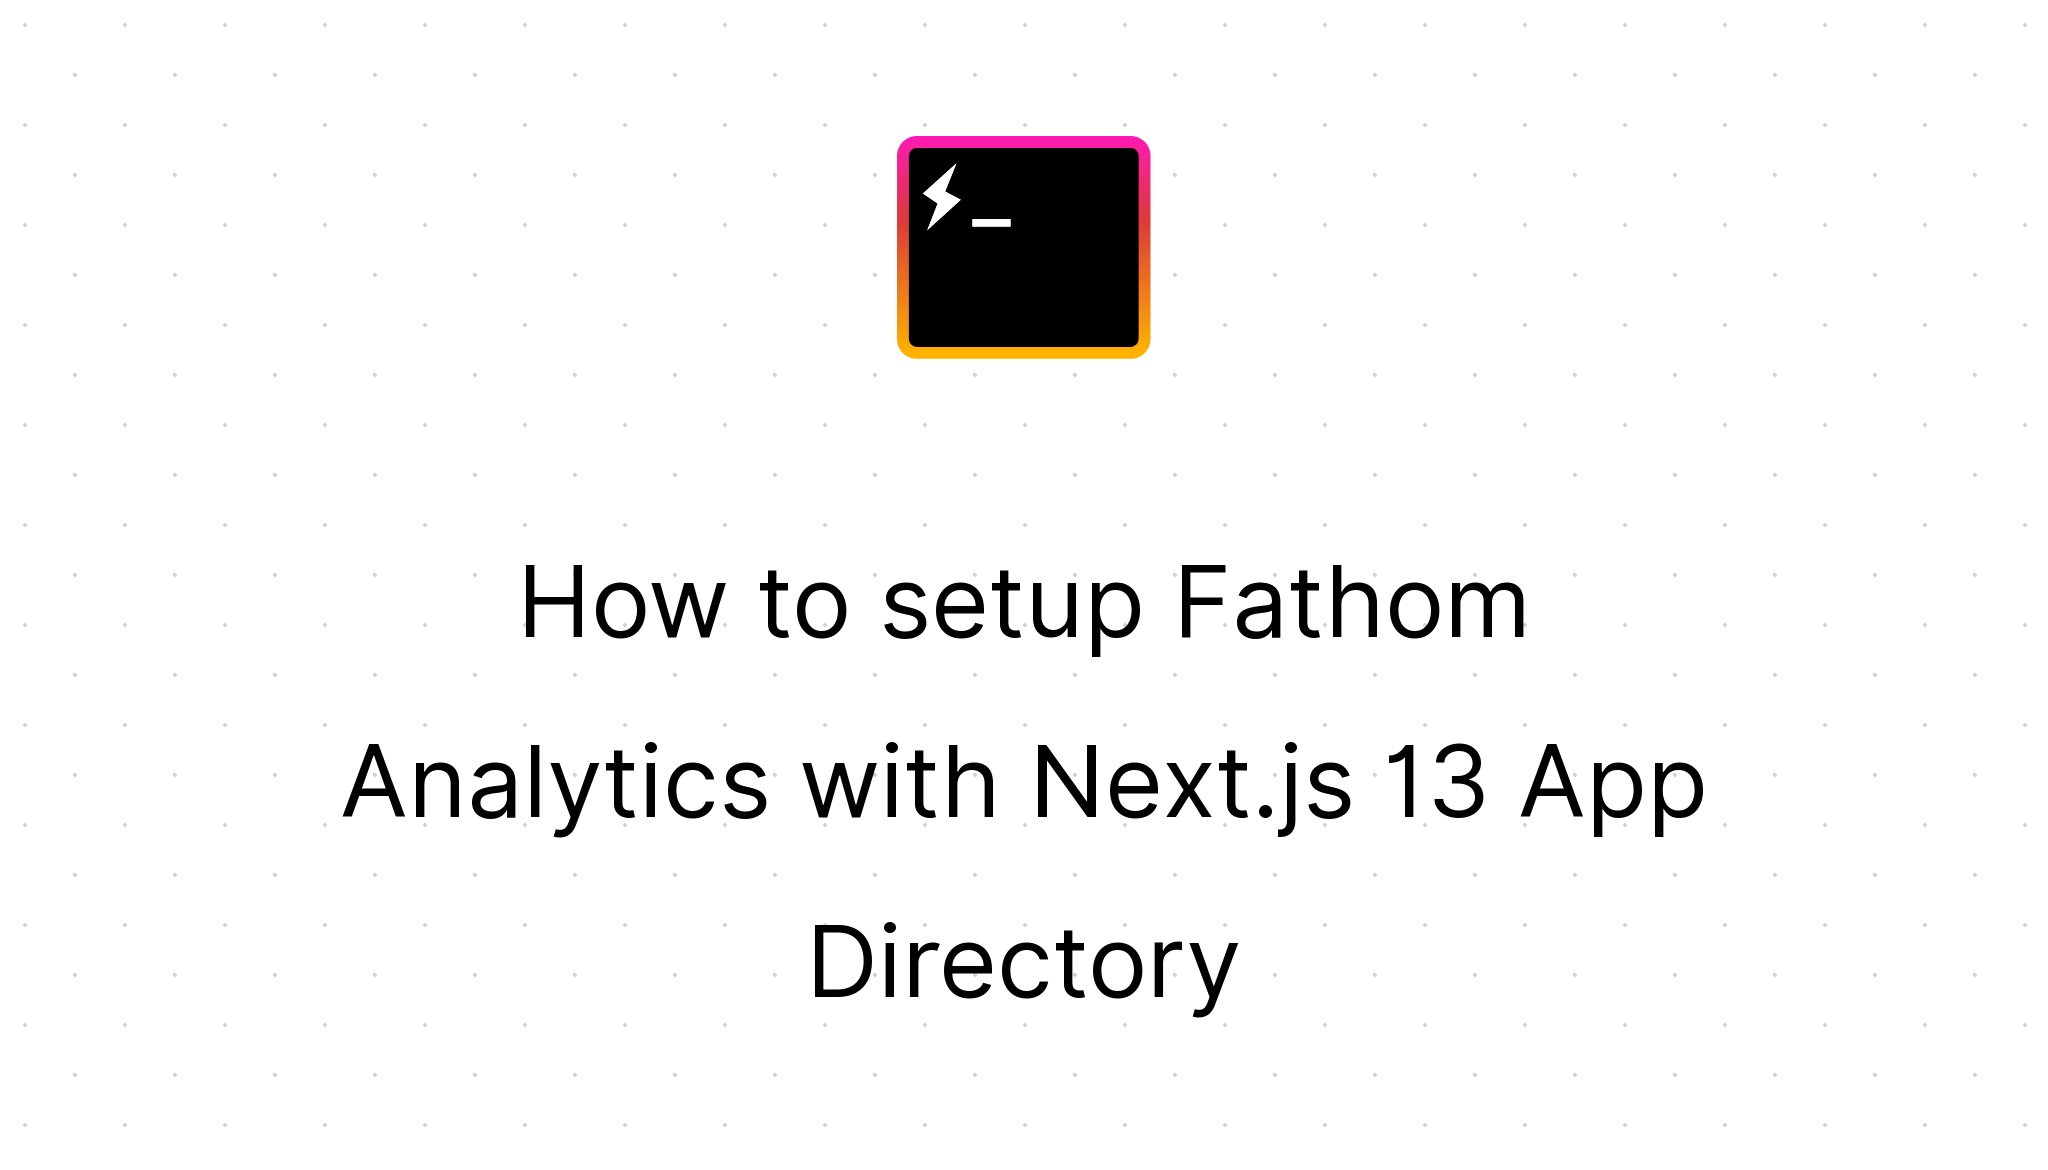 How to setup Fathom Analytics with Next.js 13 App Directory